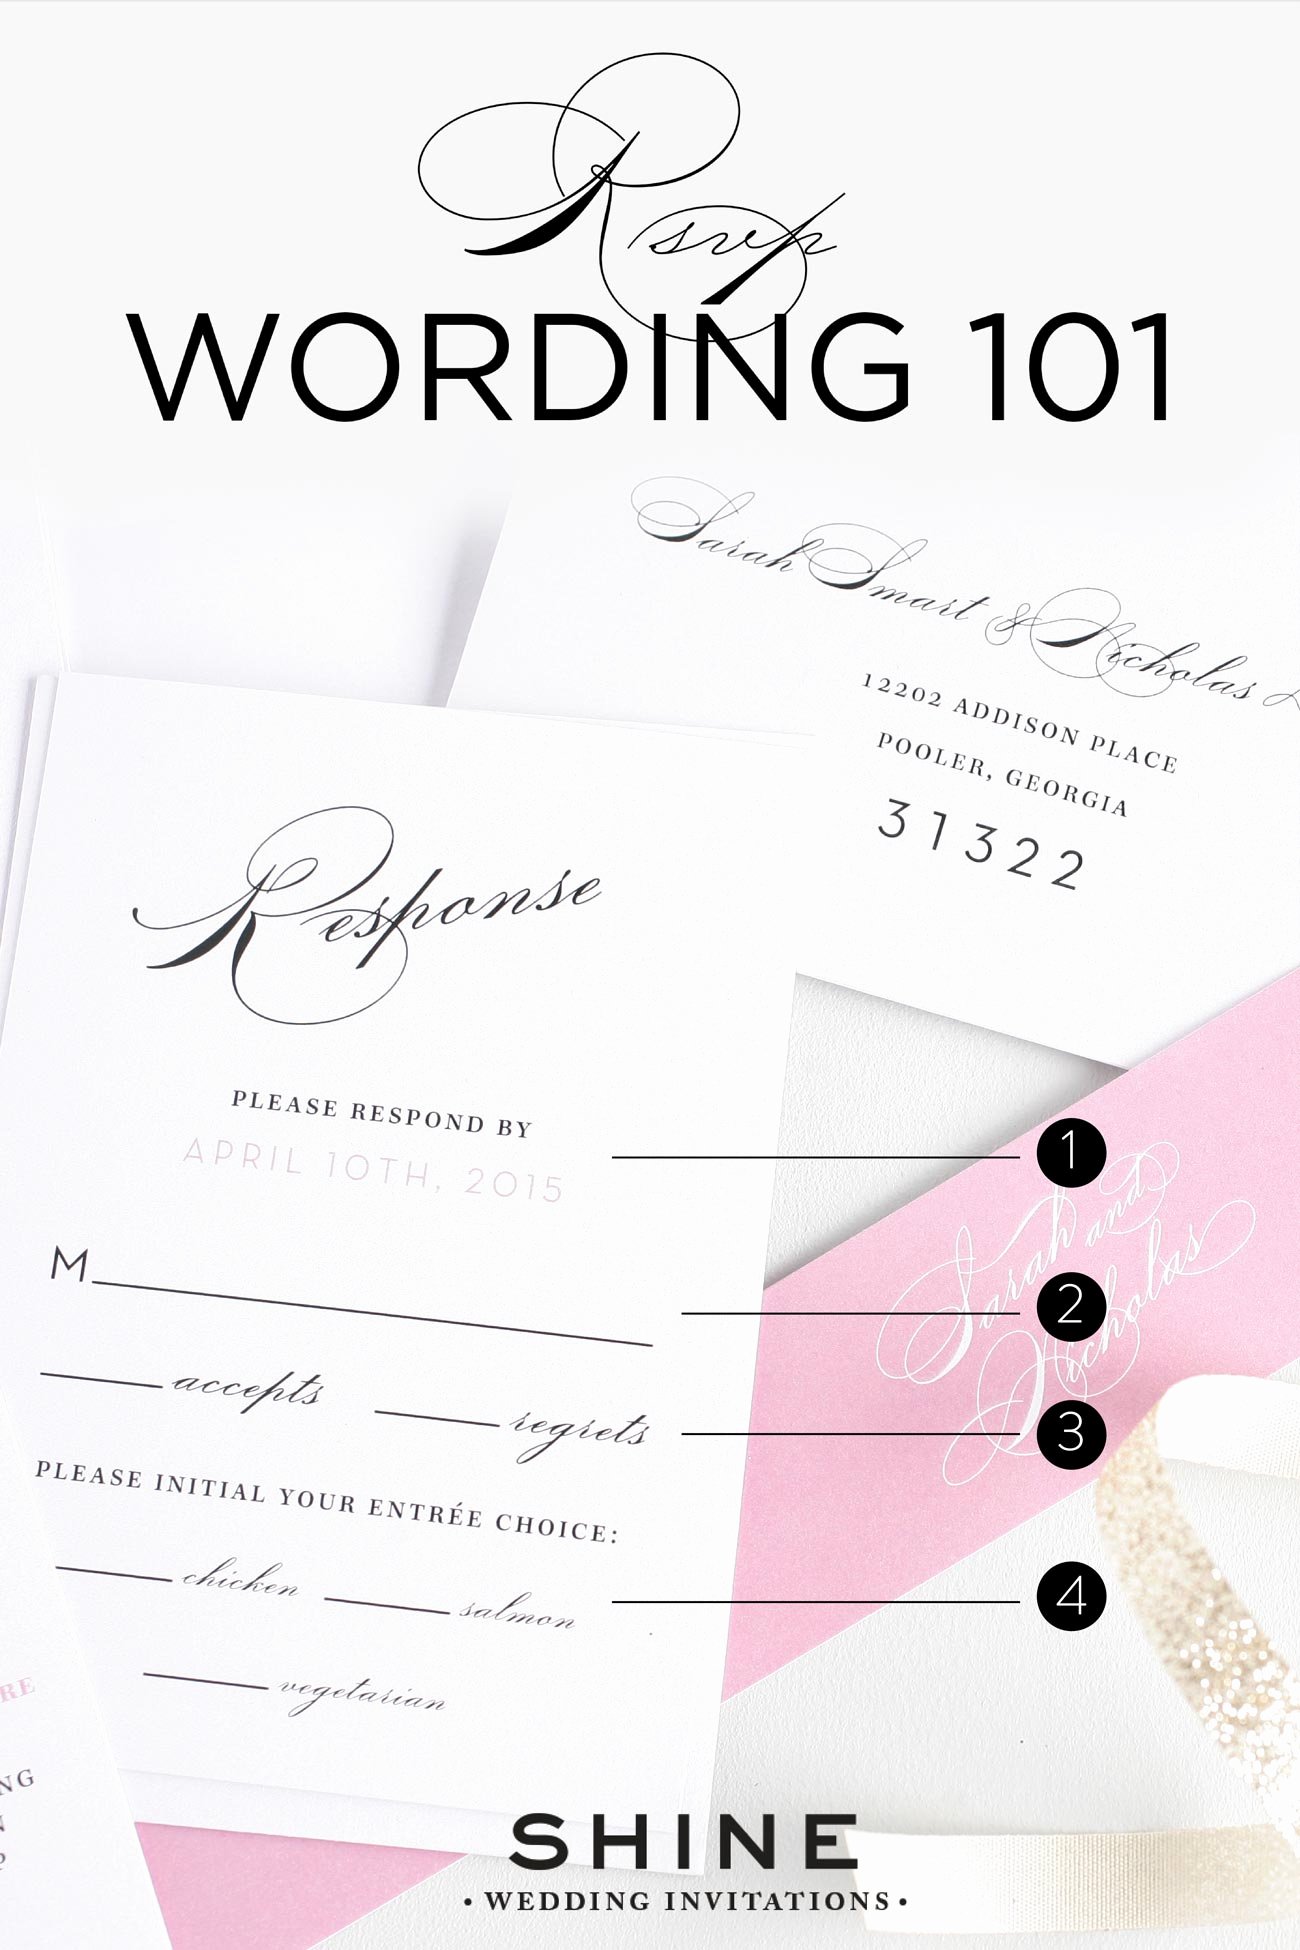 Rsvp Online Wording New Rsvp Wording 101 – Wedding Invitations